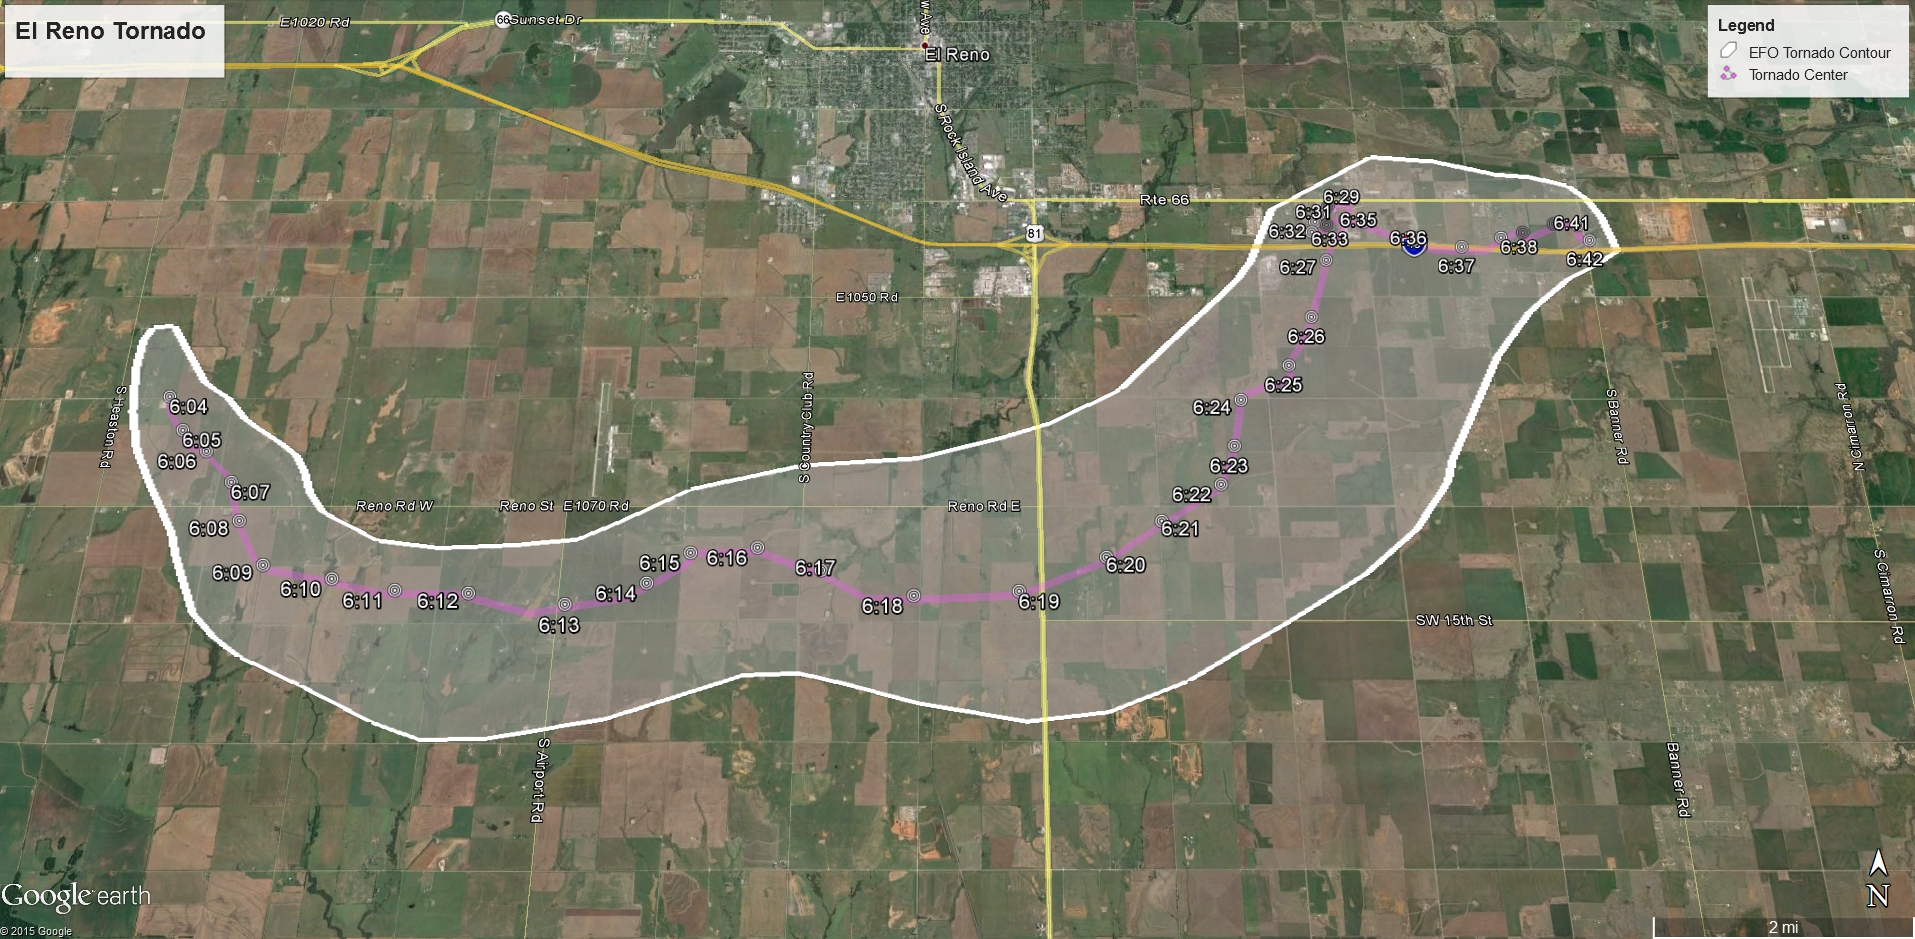 May 31, 2013 El Reno Tornado Path Map with Centroid Times